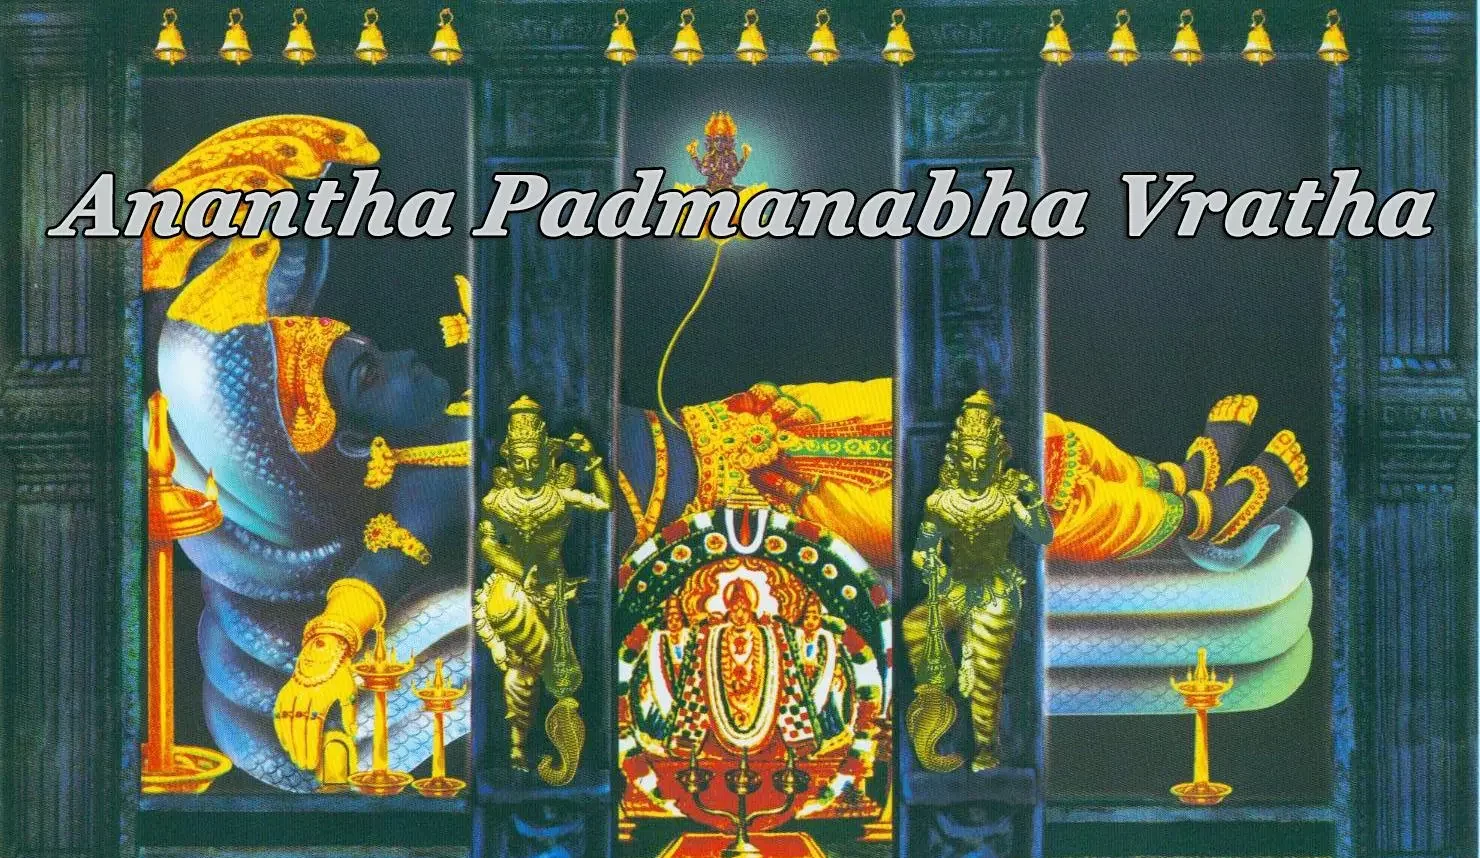 Anantha Padmanabha Vratha